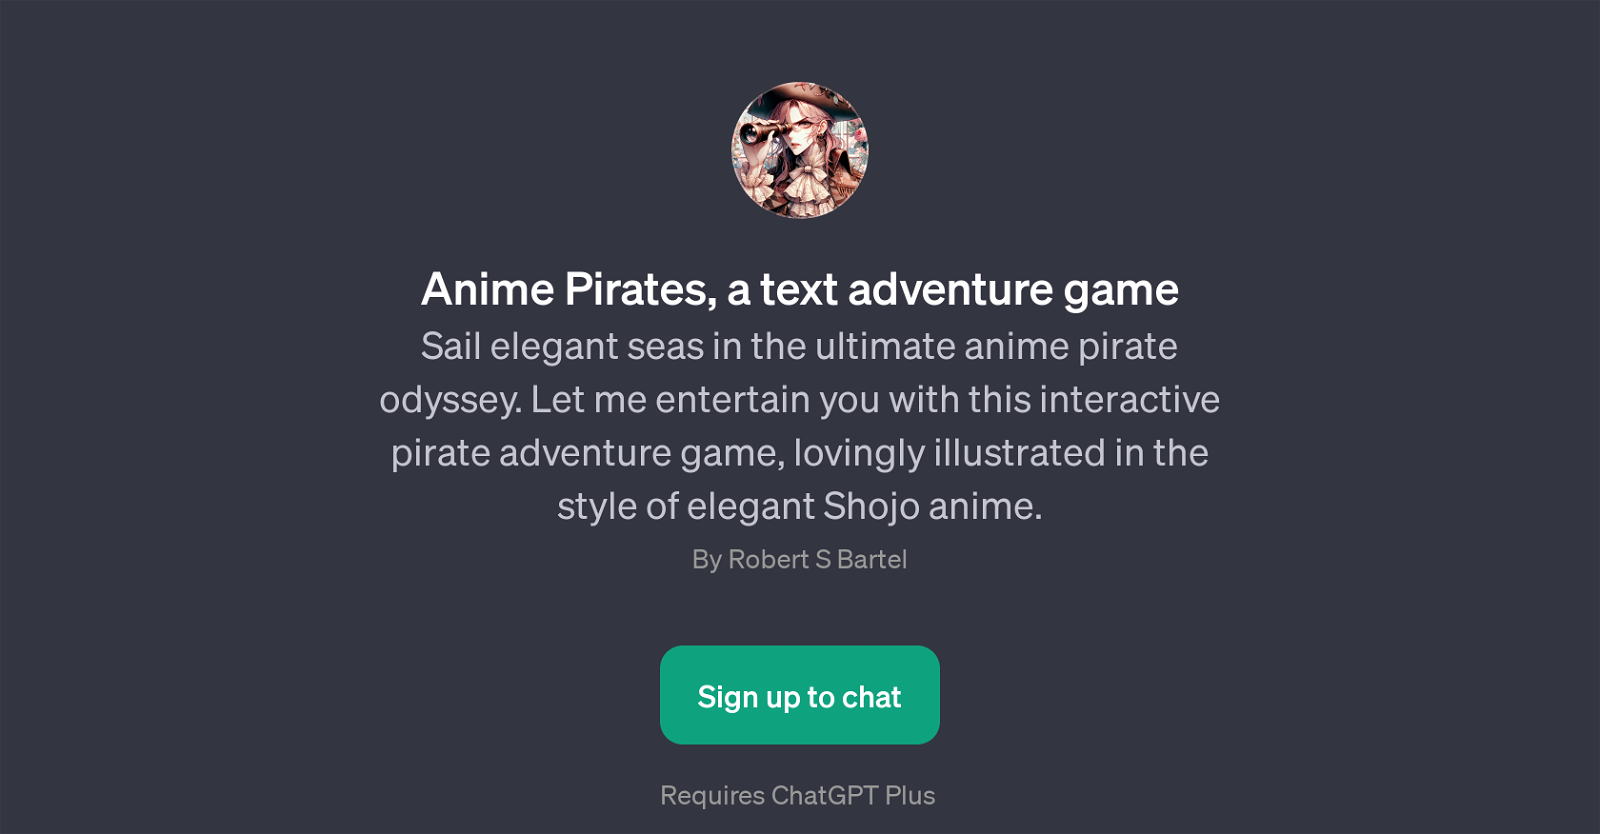 Anime Pirates website